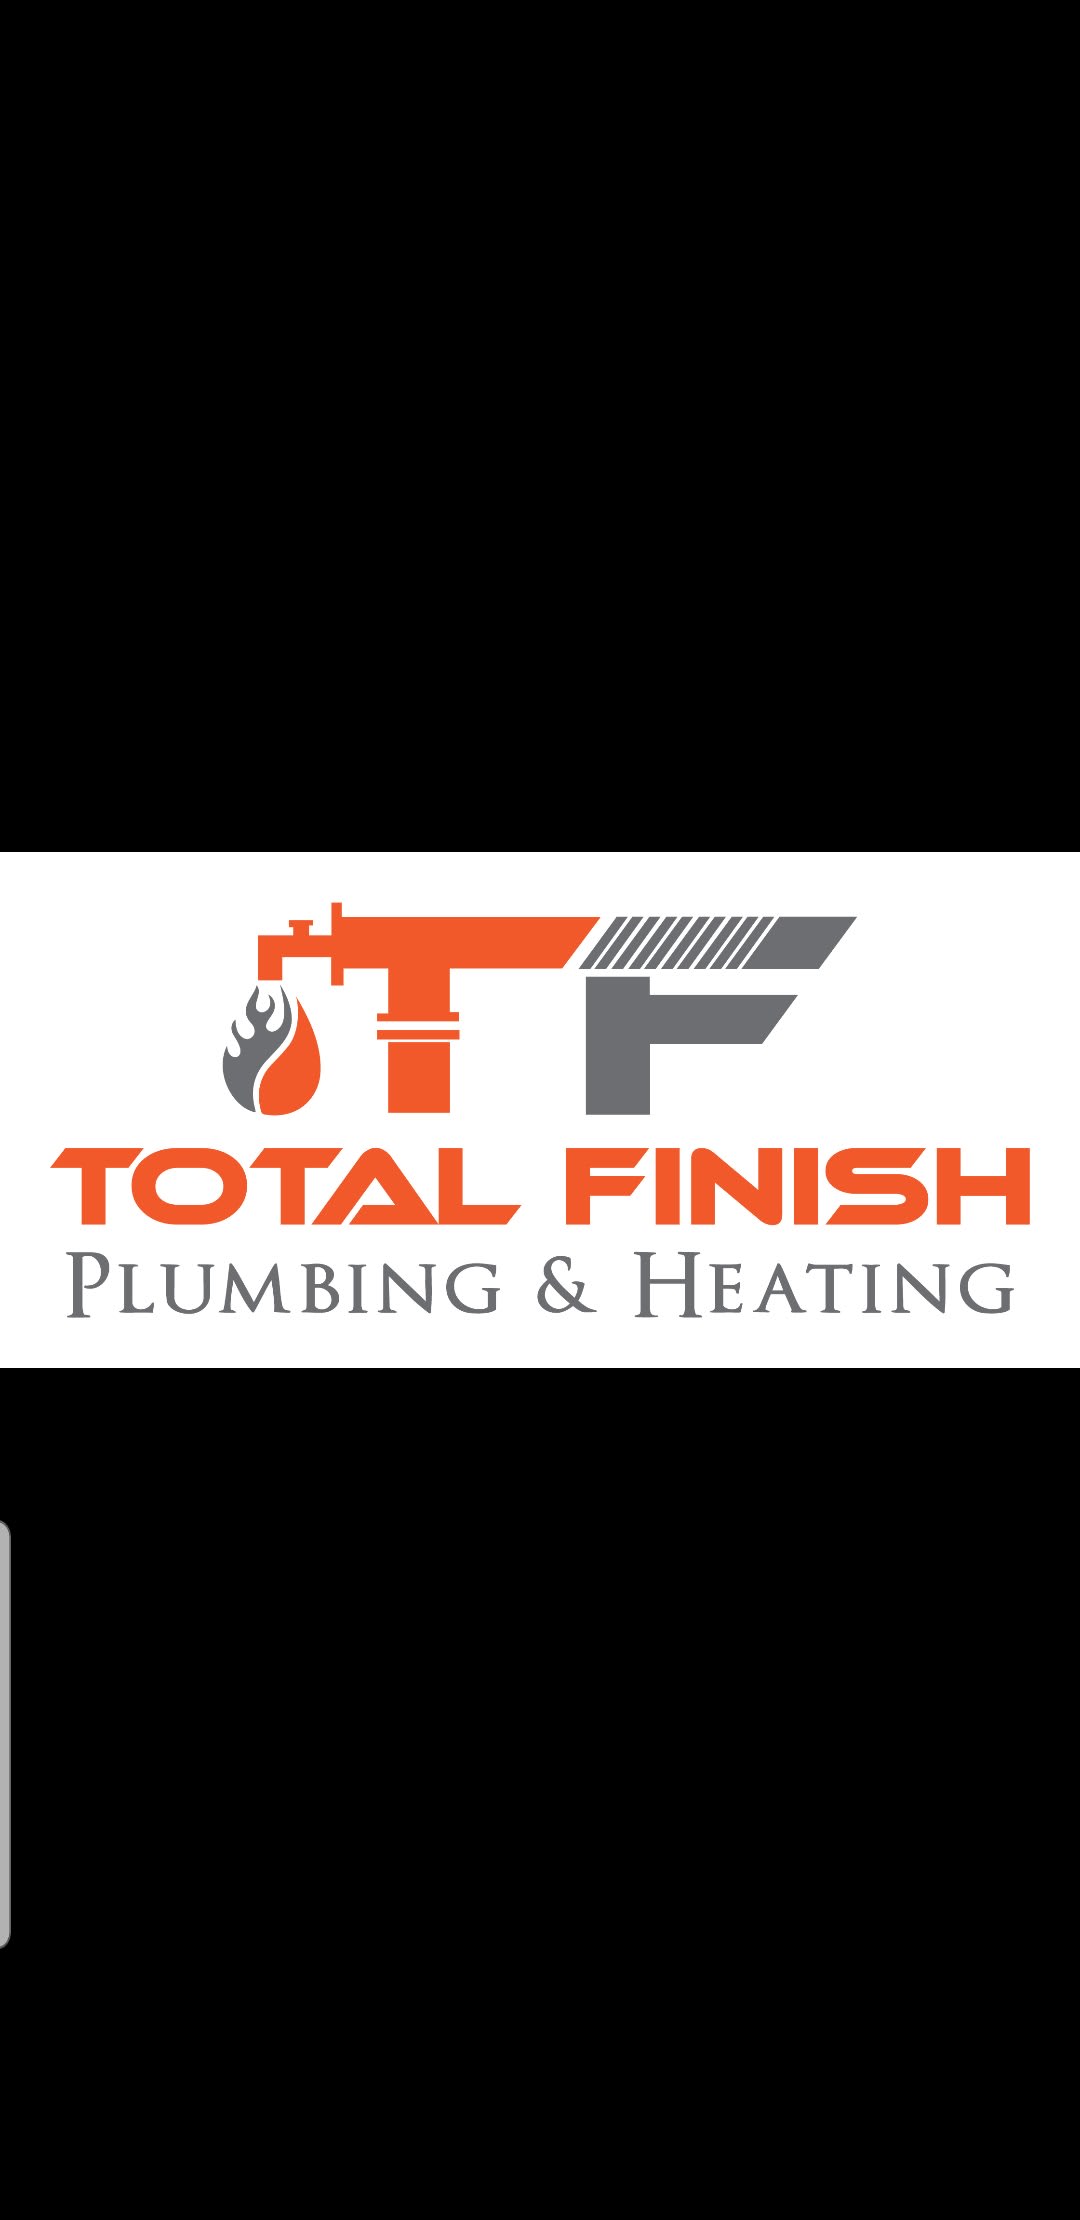 Total Finish Plumbing & Heating